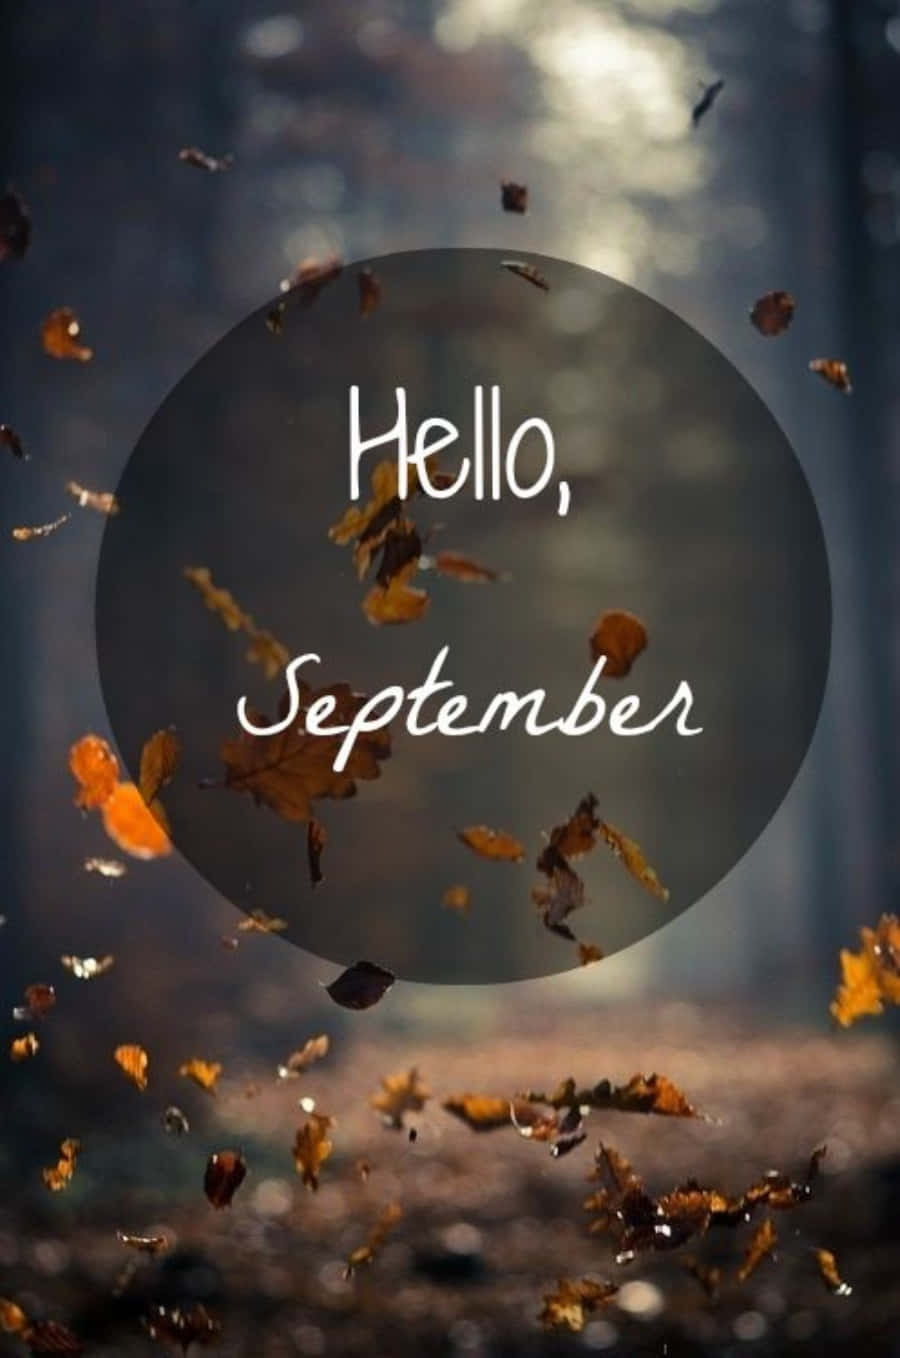 “Welcome the Abundance of September”